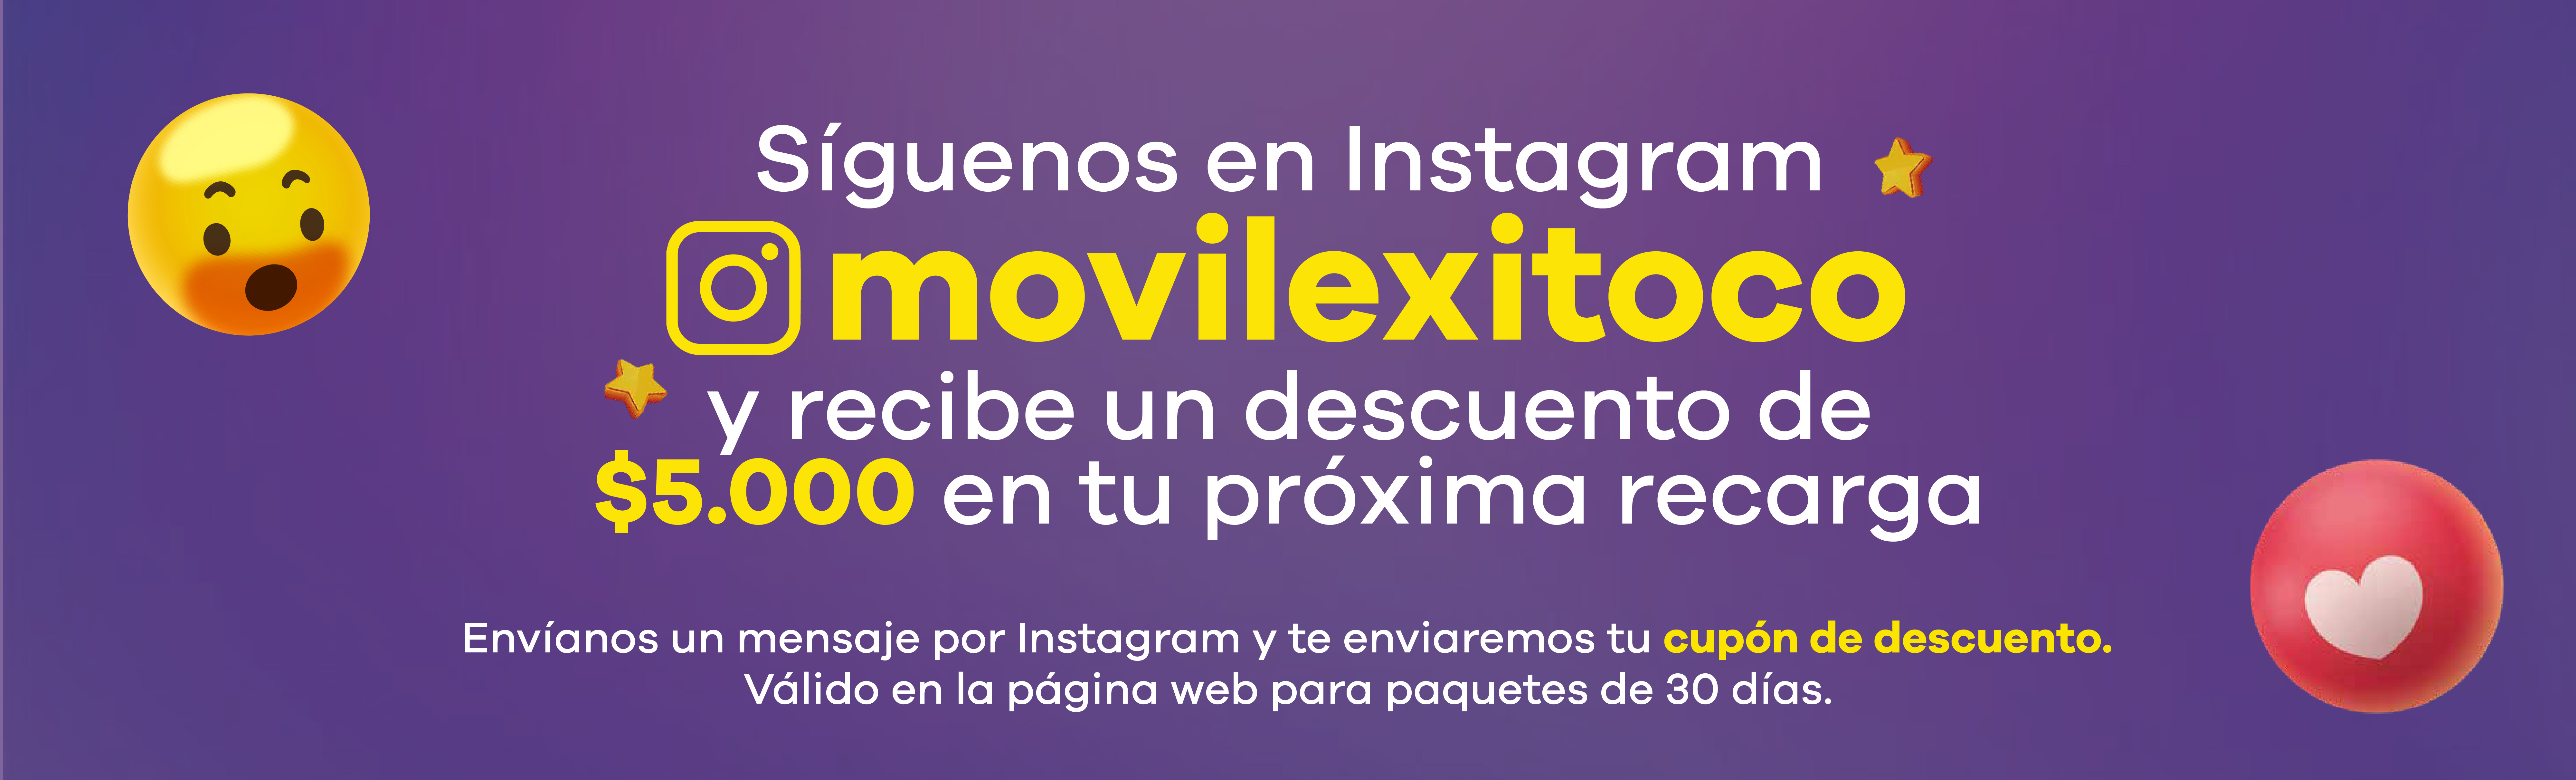 Banner Concurso Instagram Desktop